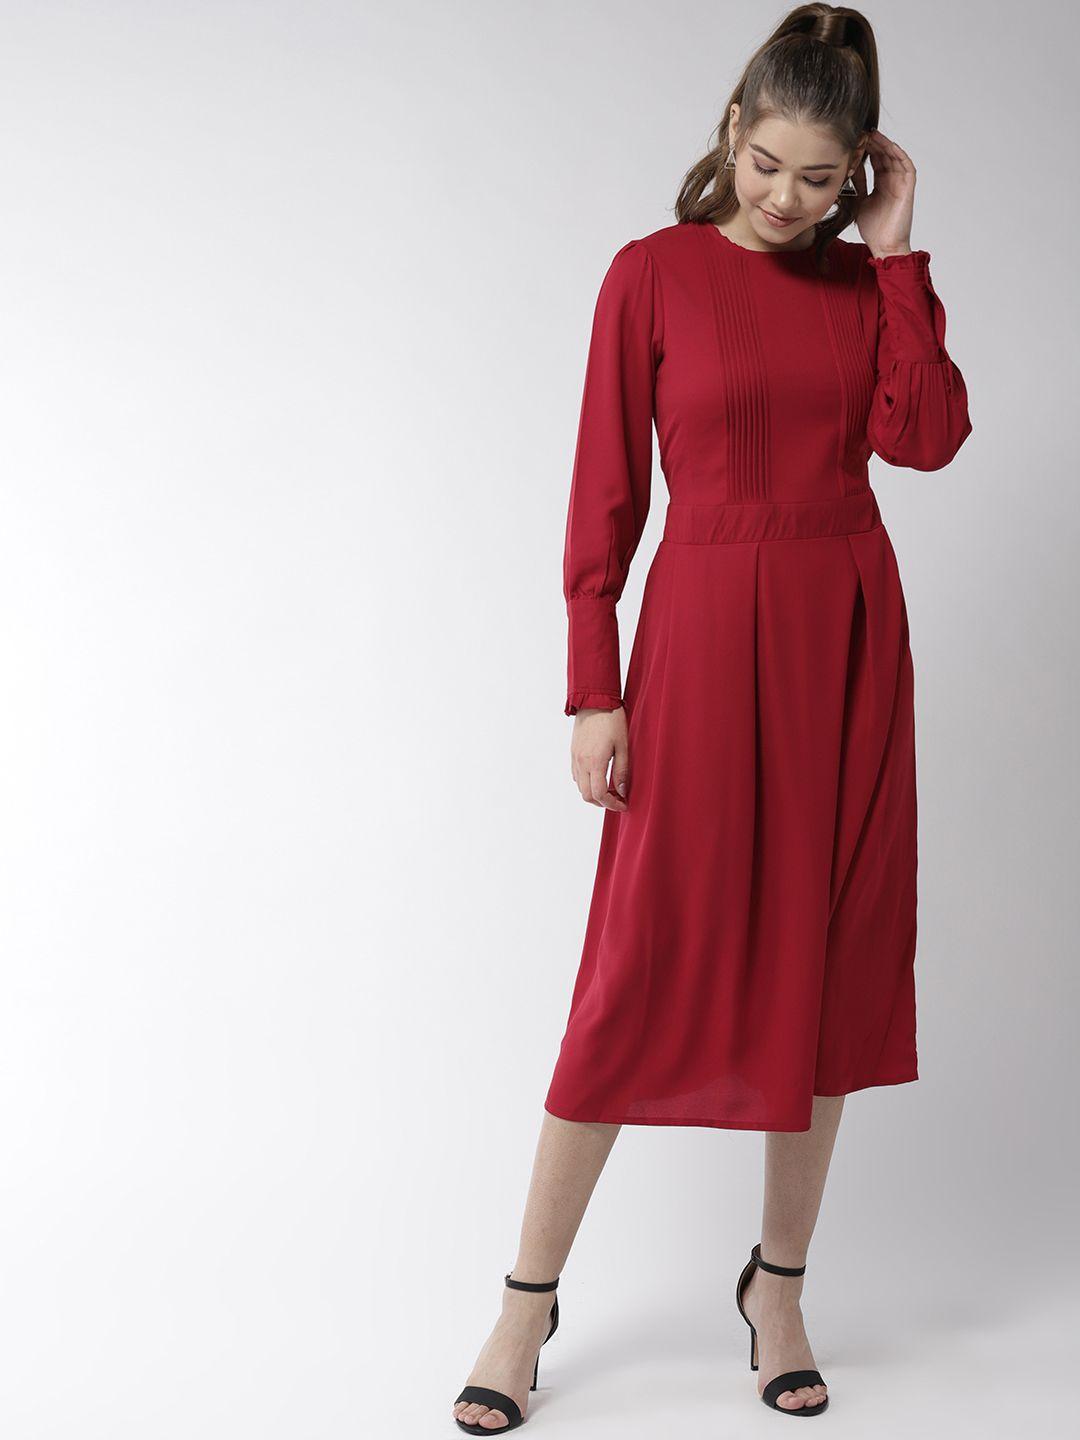 stylestone women red solid a-line dress